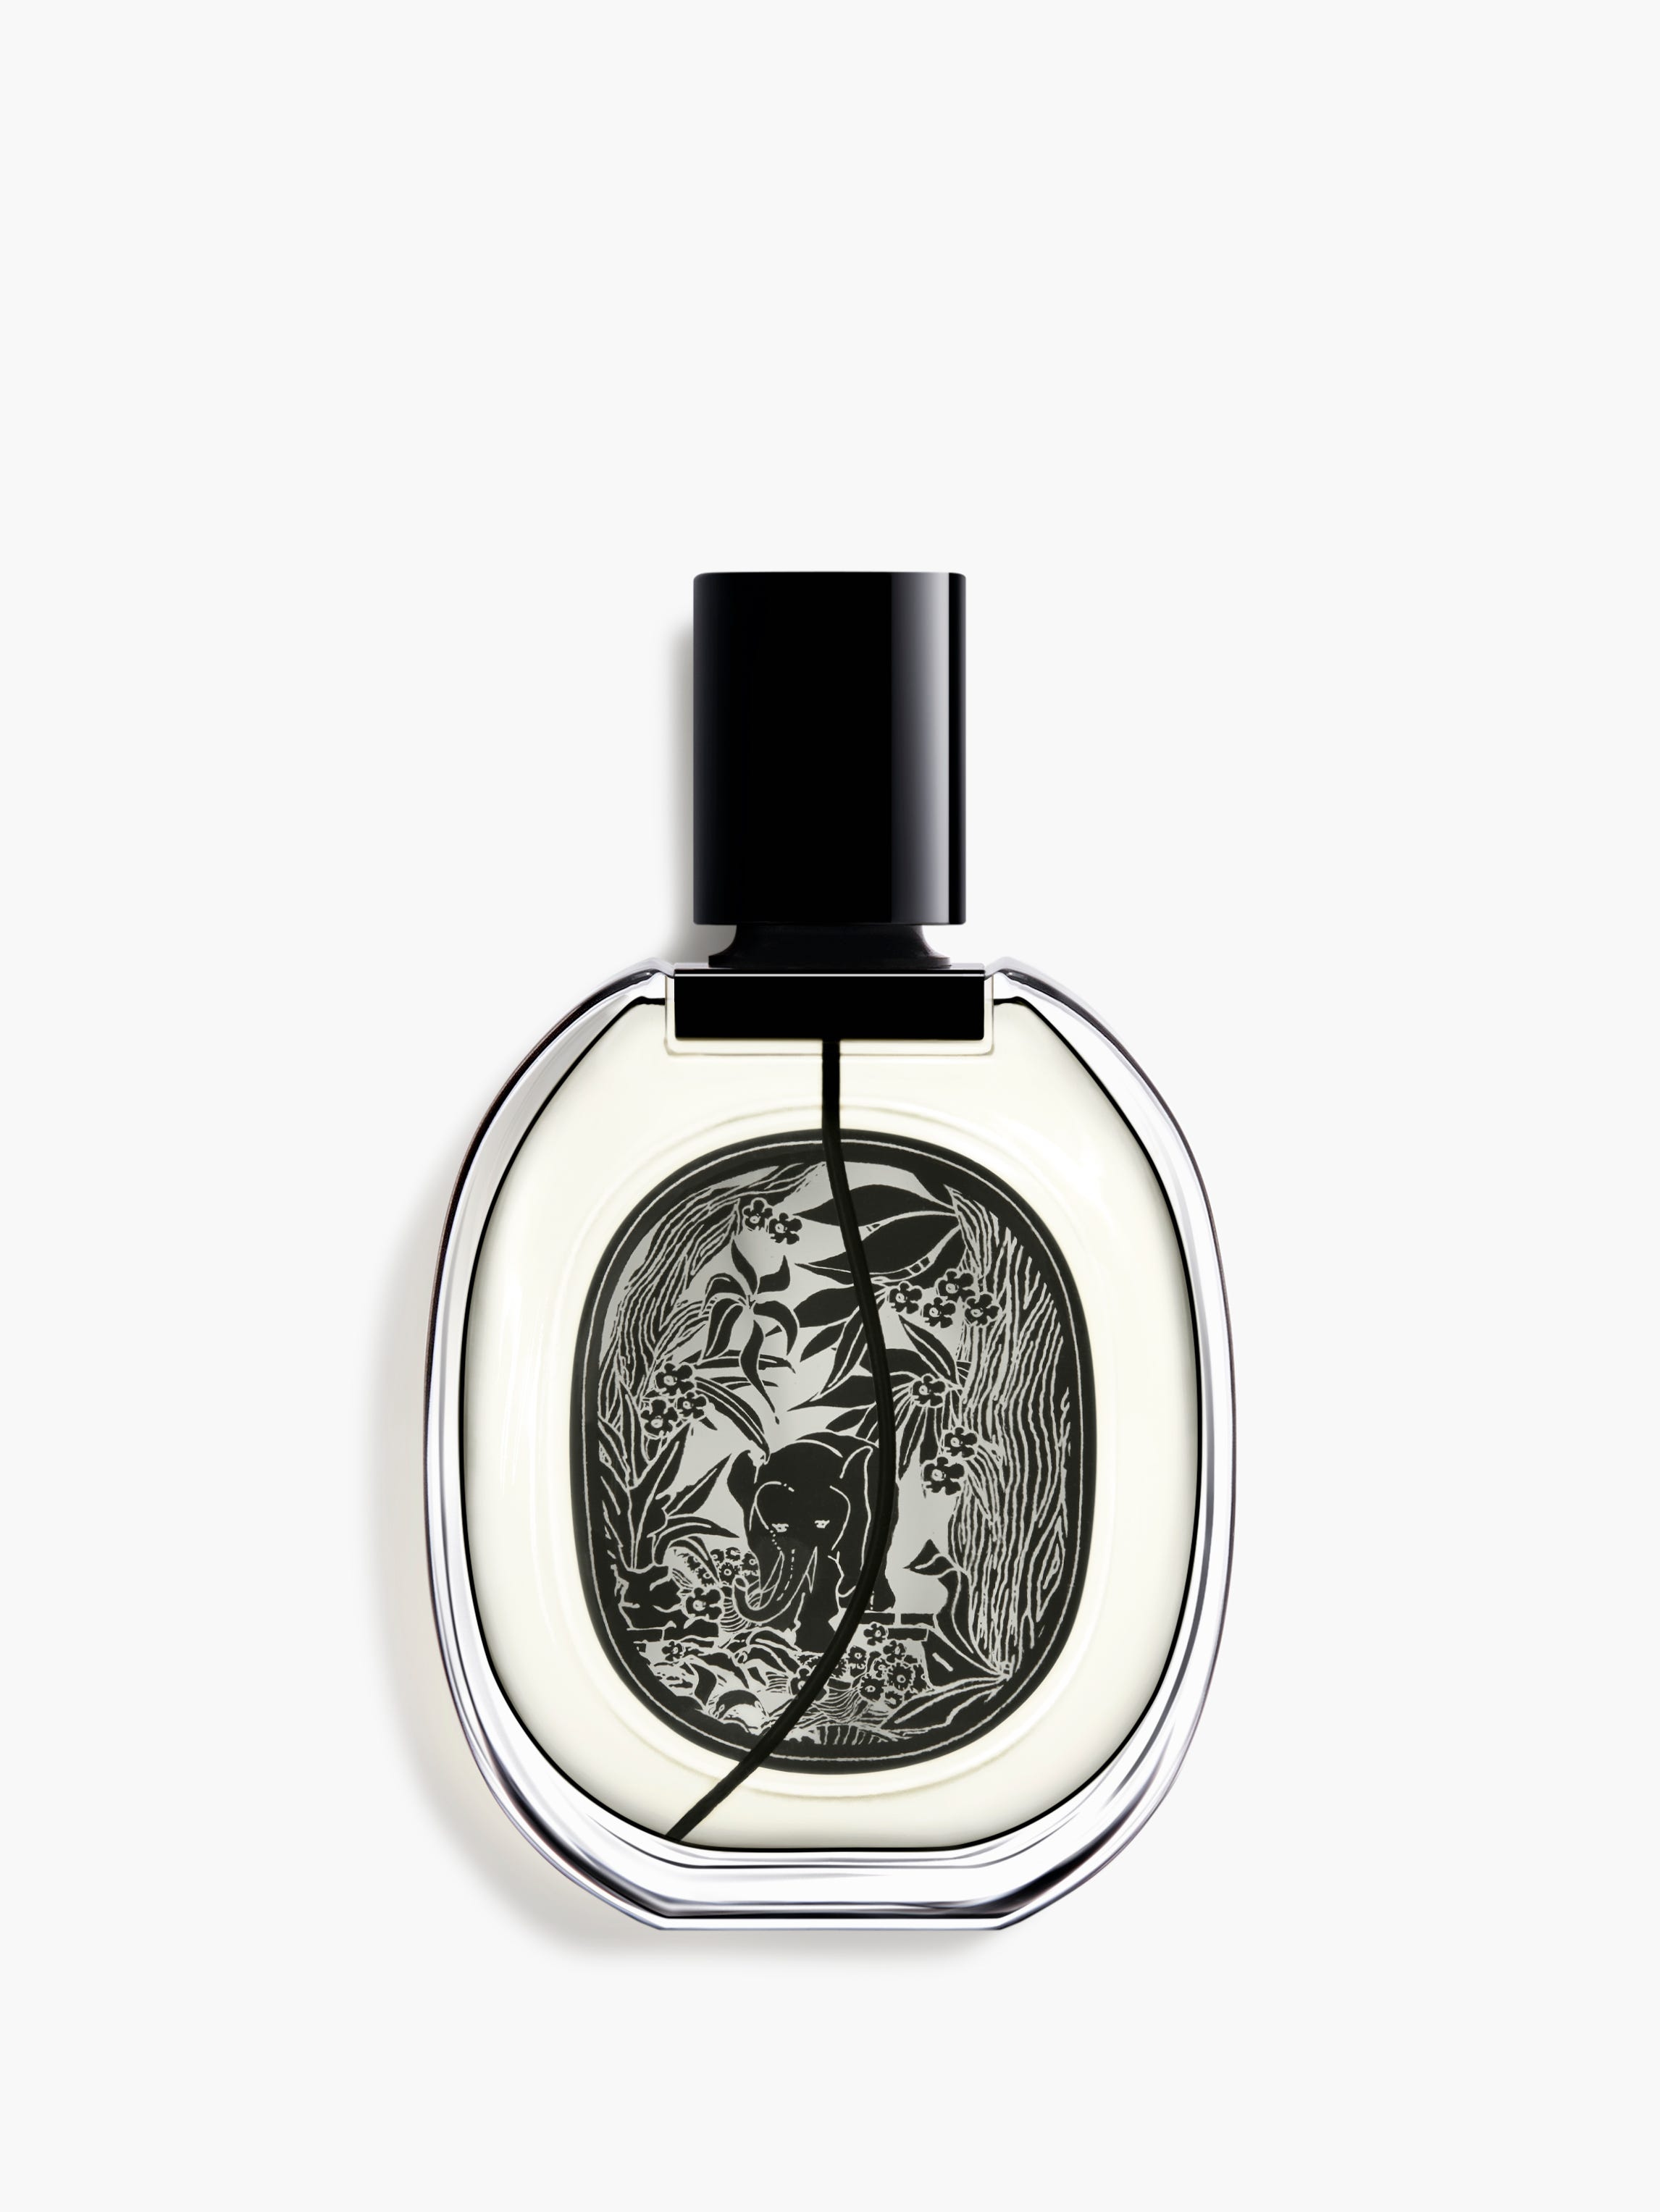 Tam Dao - Eau de parfum 75ml | Diptyque Paris